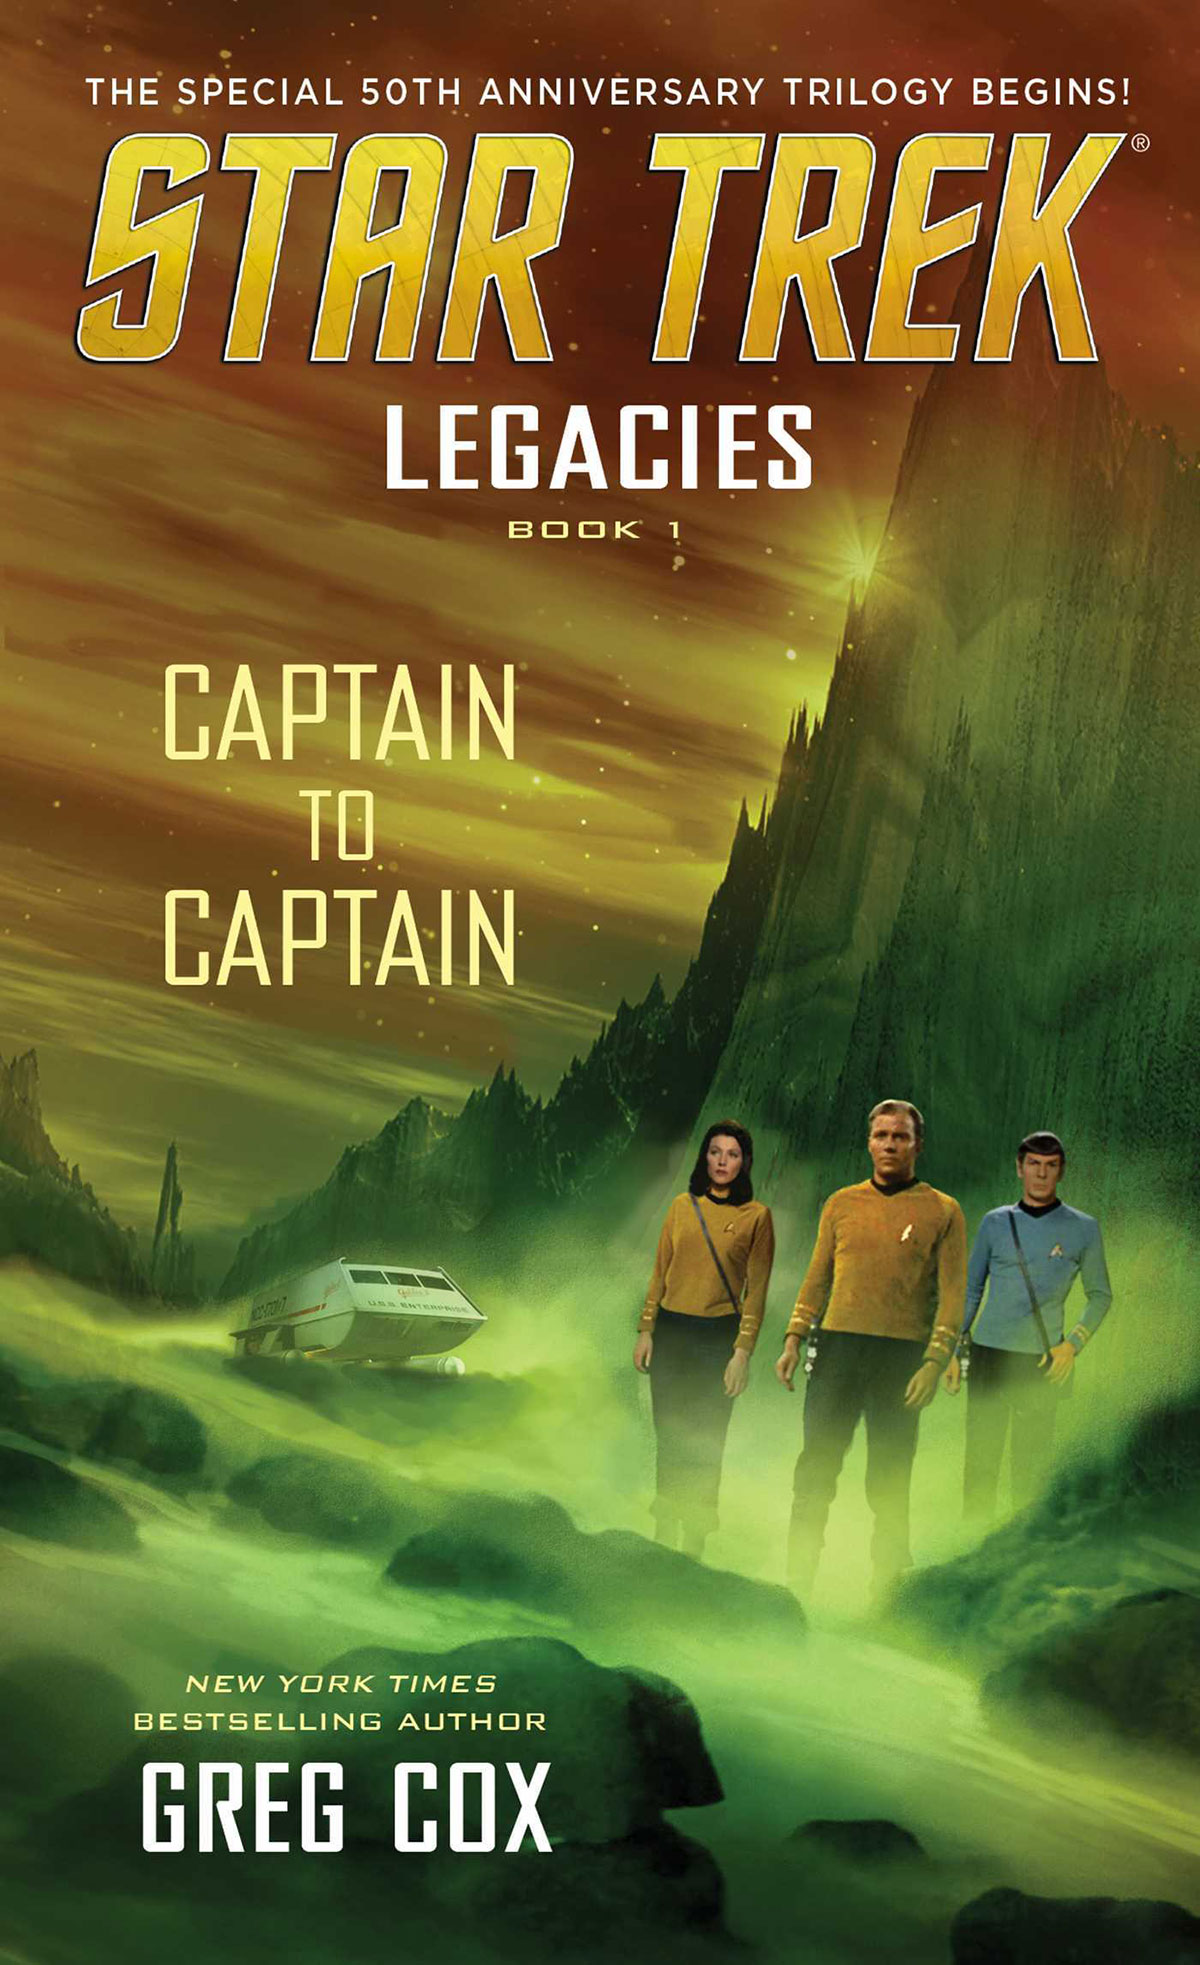 Star Trek: Legacies is a trilogy released in 2016 celebrating the 50th anniversary of Star Trek.